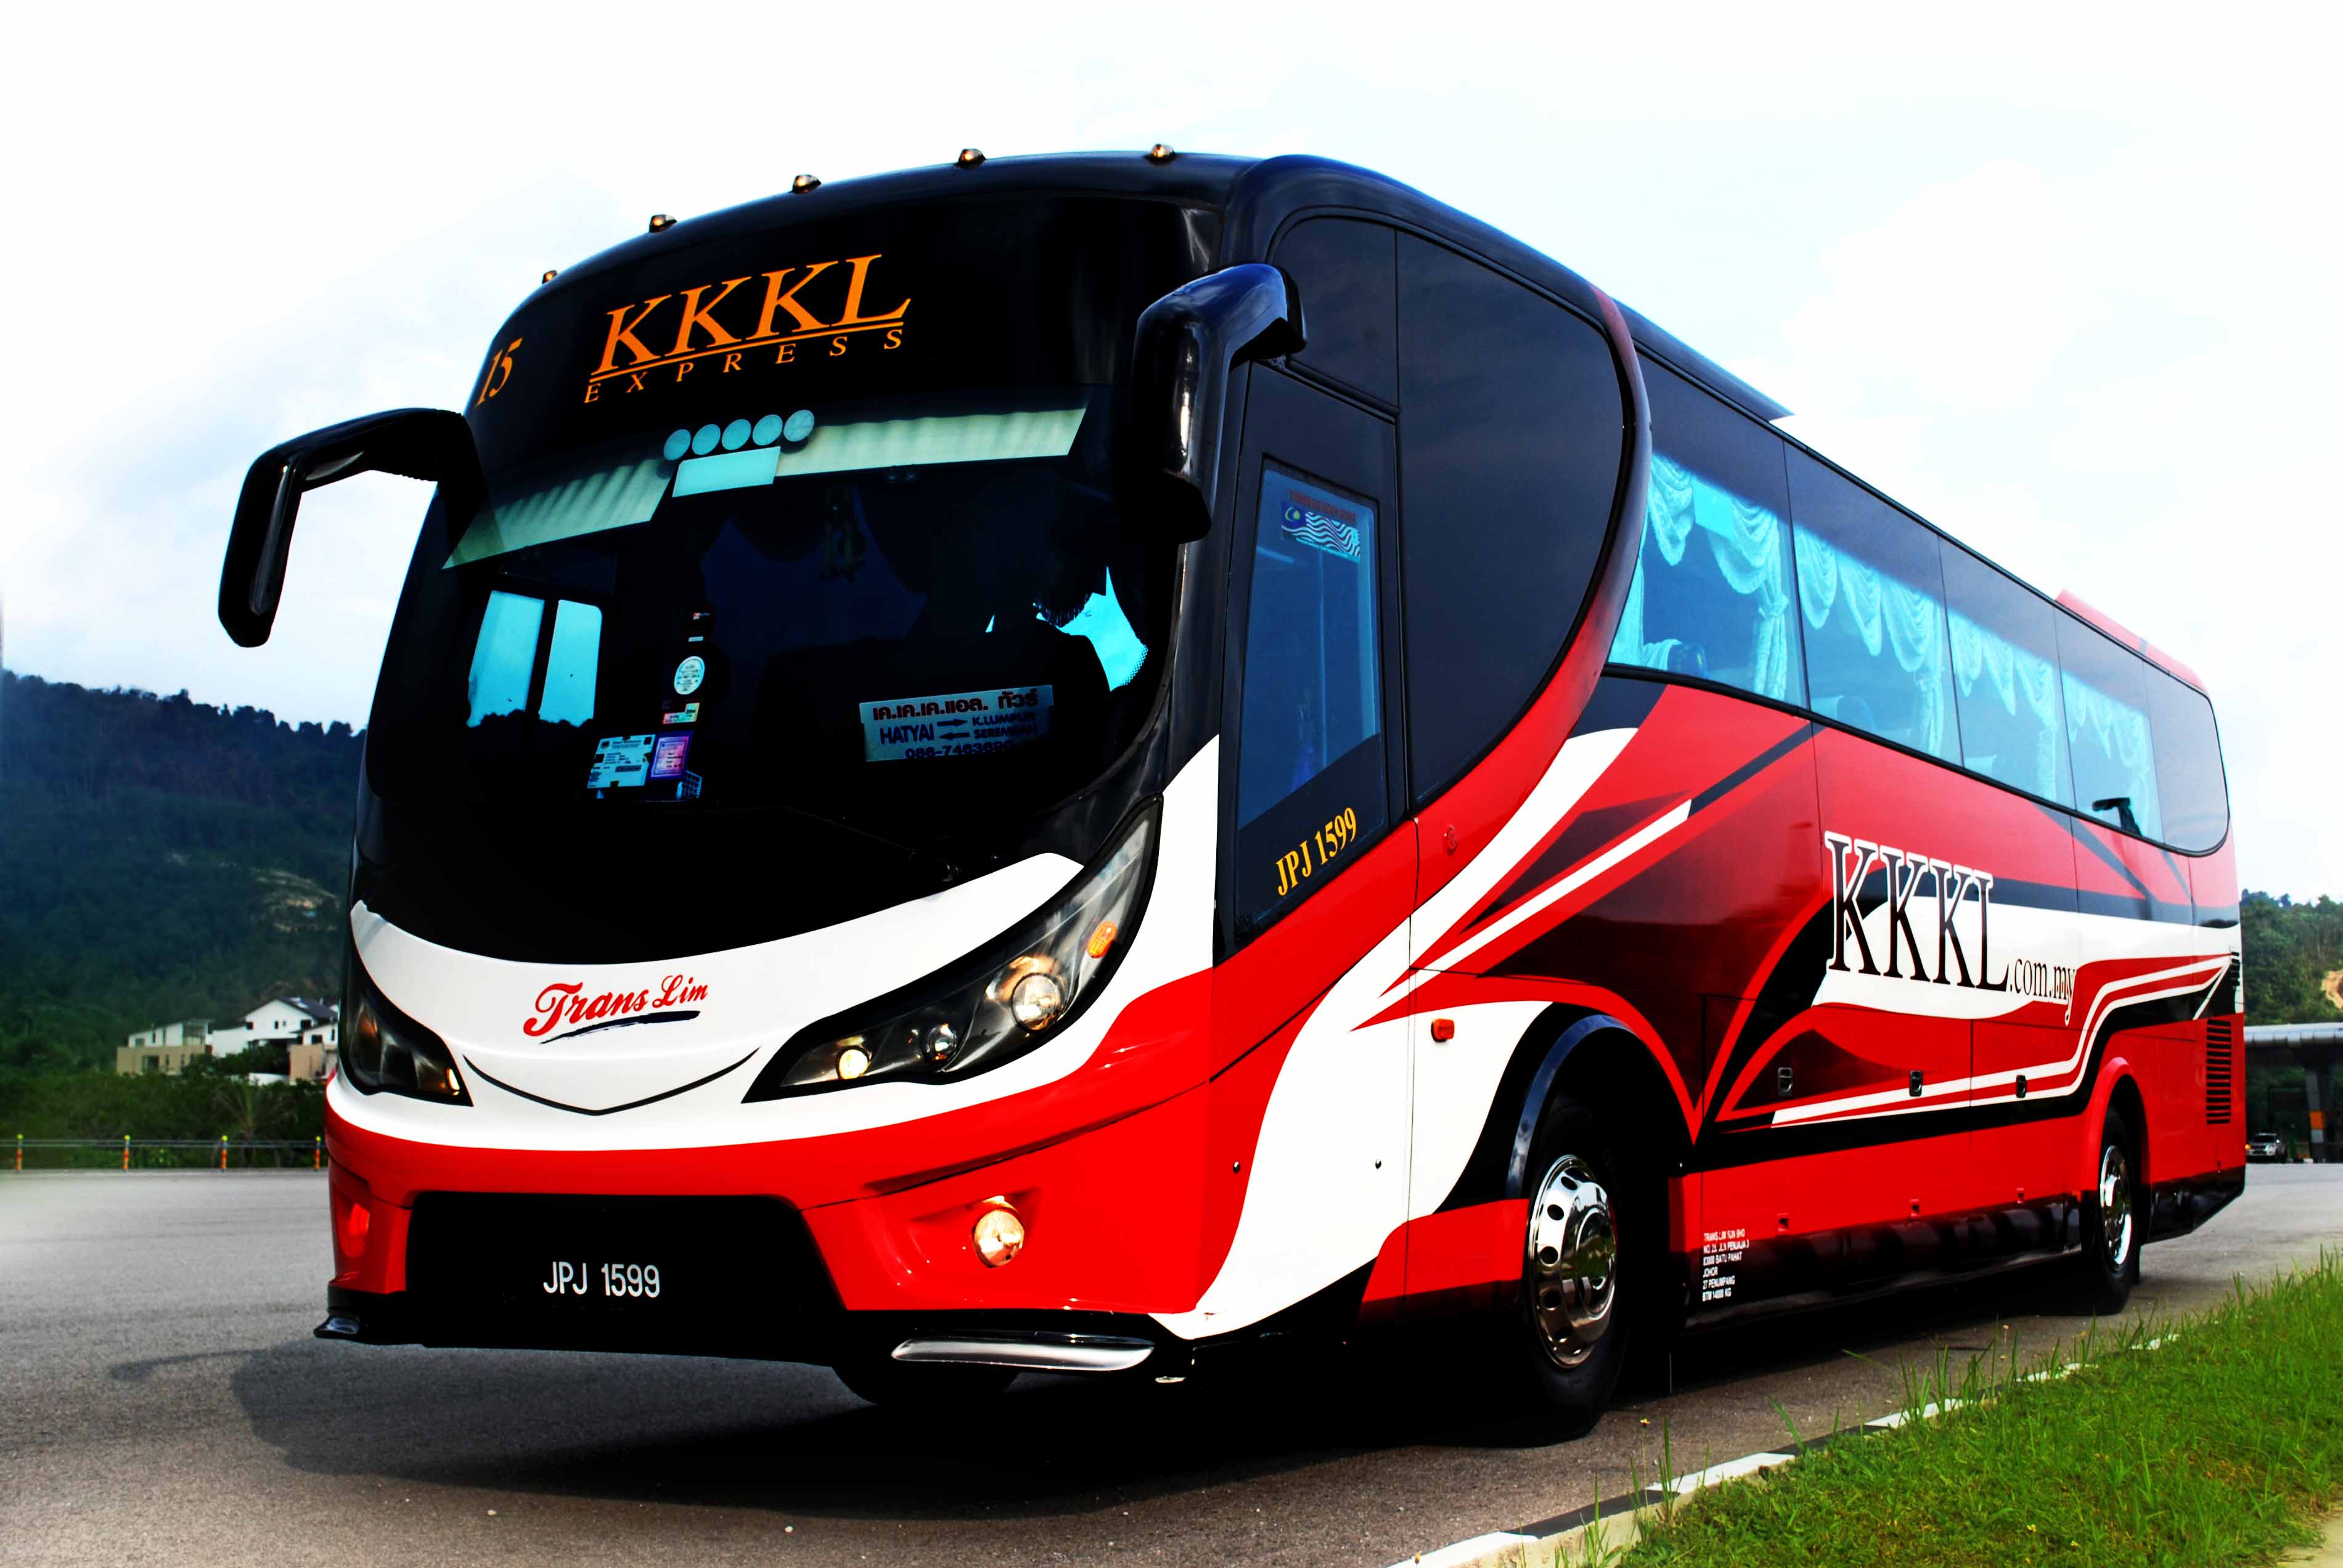 Bus from Singapore to Kuala Lumpur  KKKL Travel & Tours